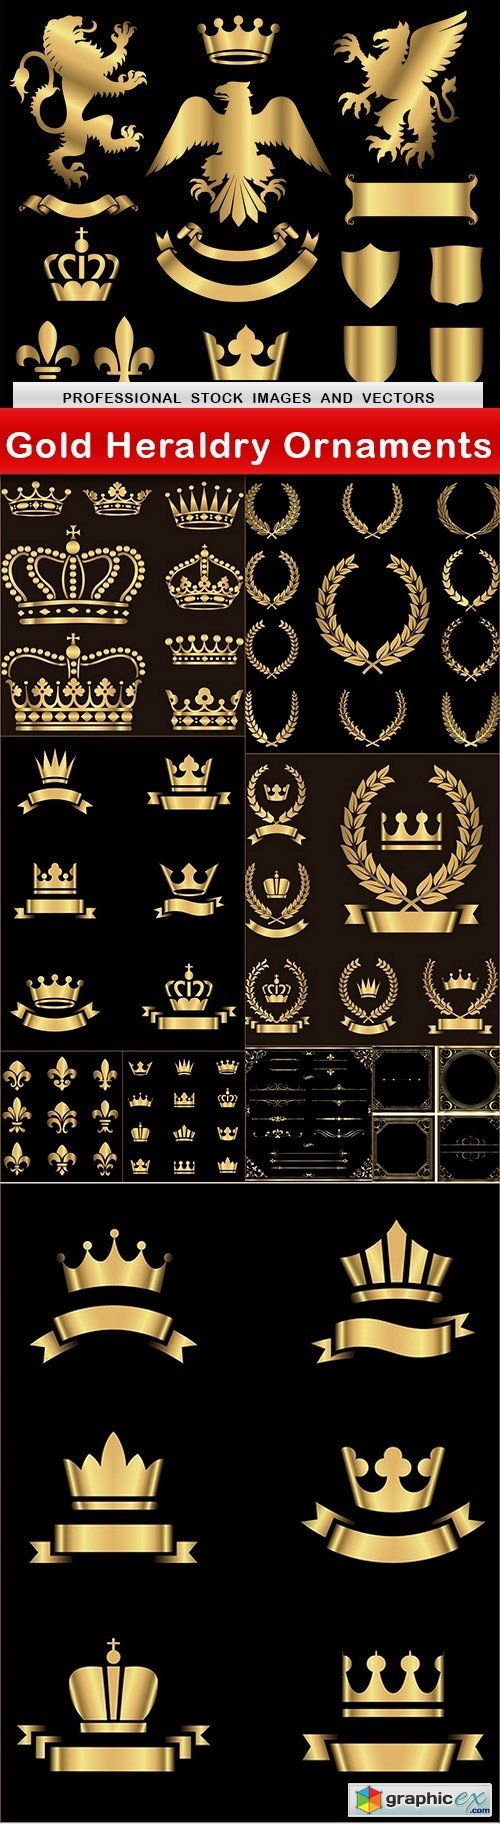 Gold Heraldry Ornaments - 10 EPS